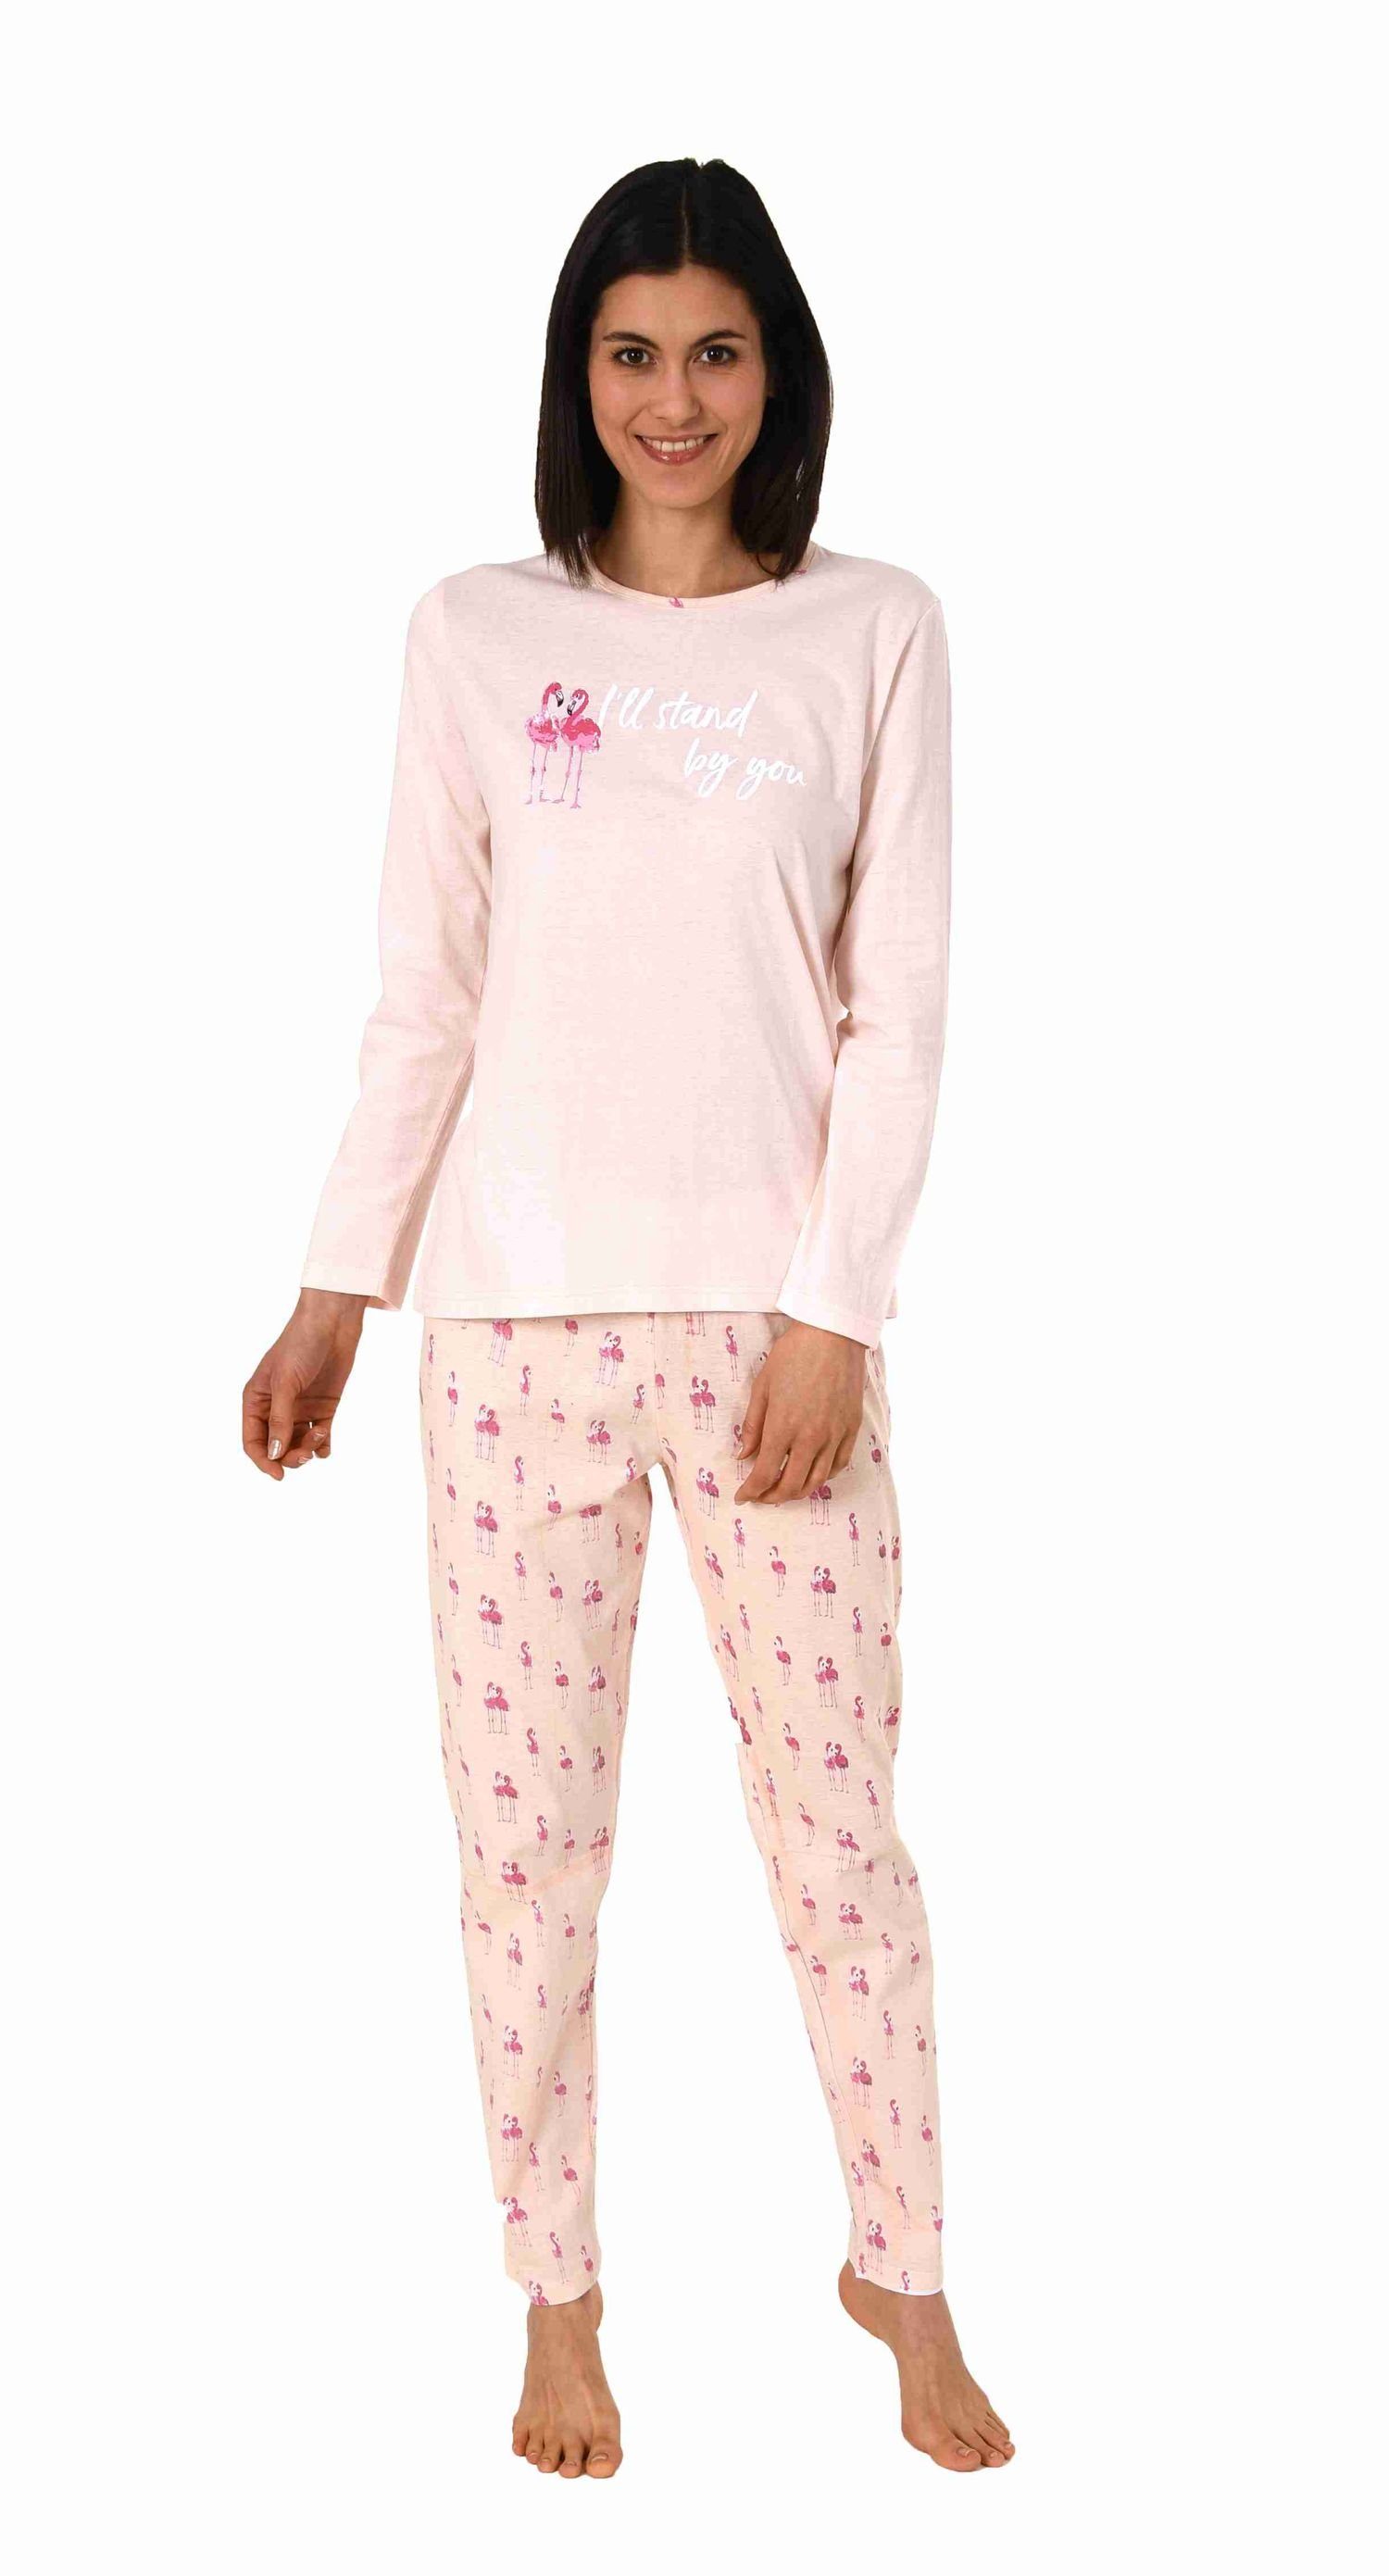 Normann Pyjama Damen Schlafanzug mit Flamingo als Motiv, Pyjamahose allover bedruckt | Pyjamas